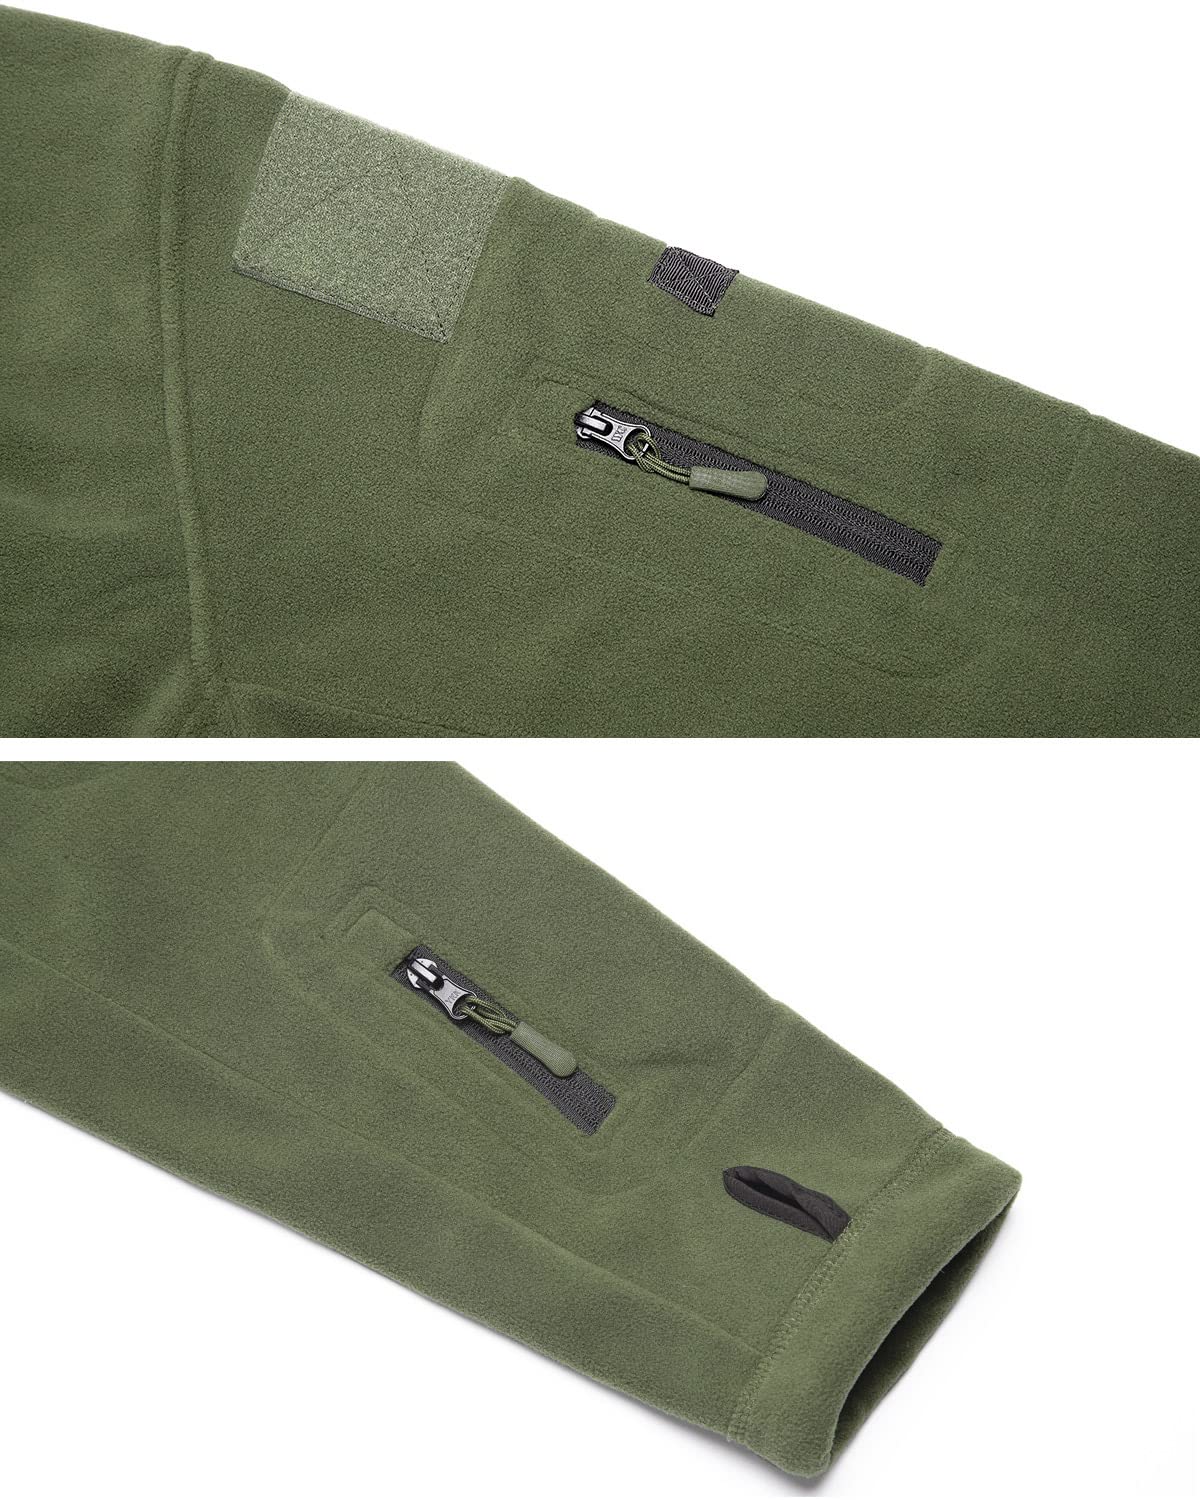 Outdoor Jacket Waterproof Olive Green TAD Breathable Tactical Fleece Jacket